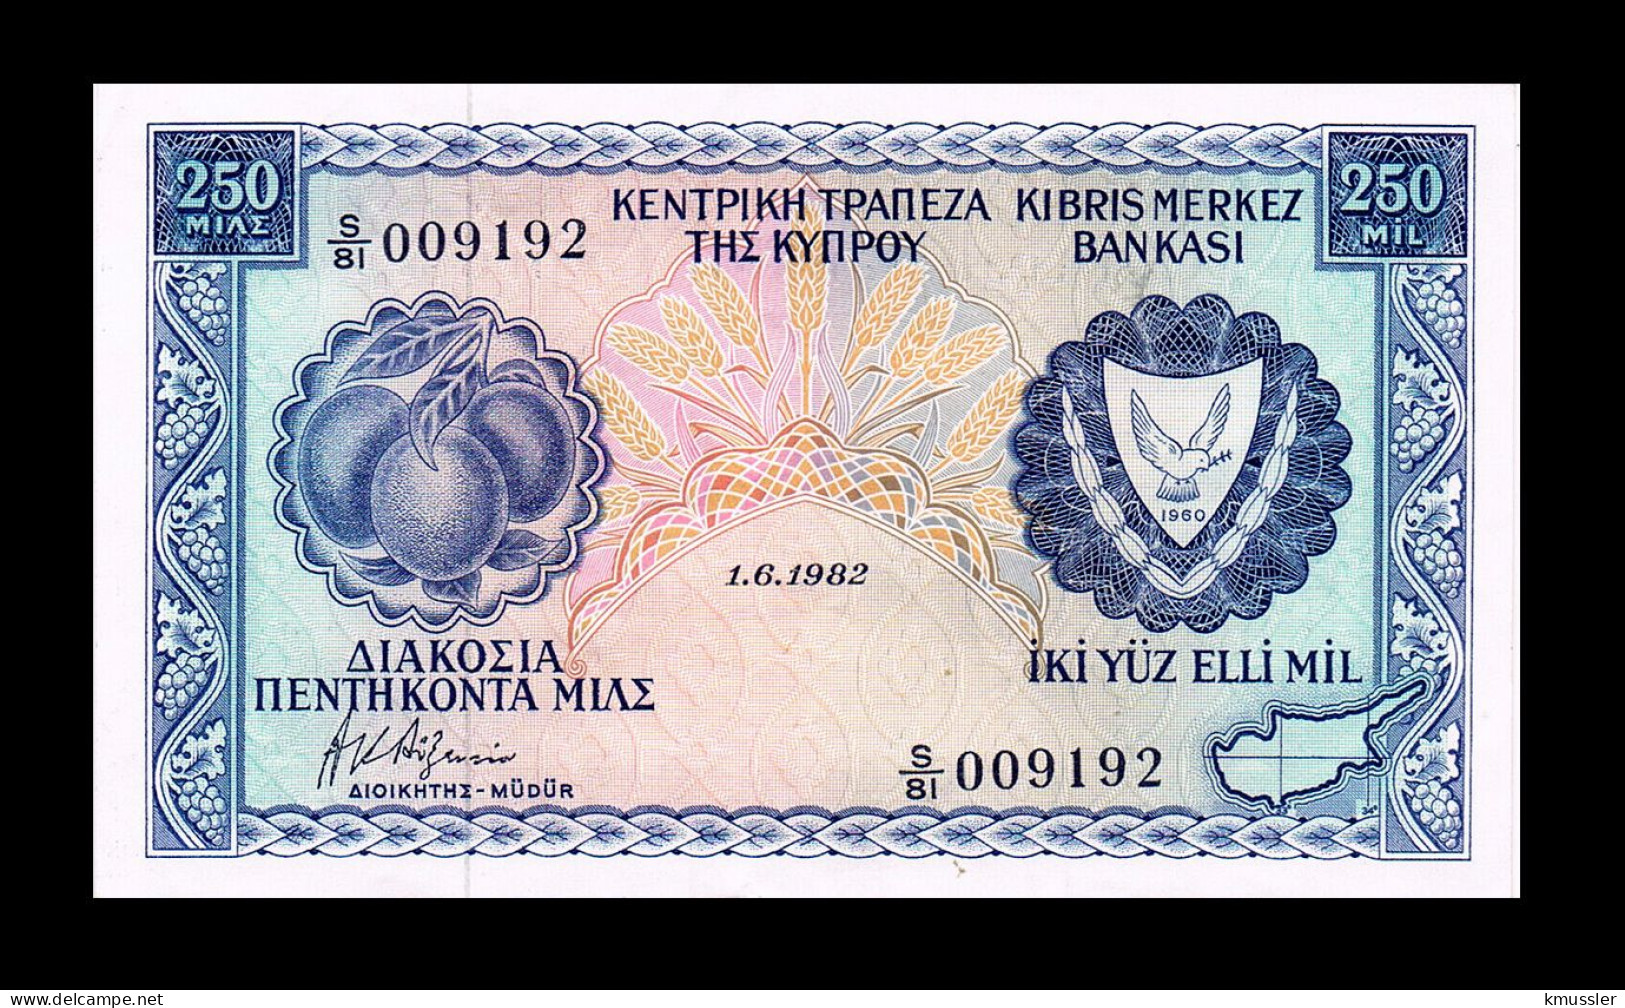 # # # Banknote Zypern (Cyprus) 250 Mils 1982 # # # - Chypre